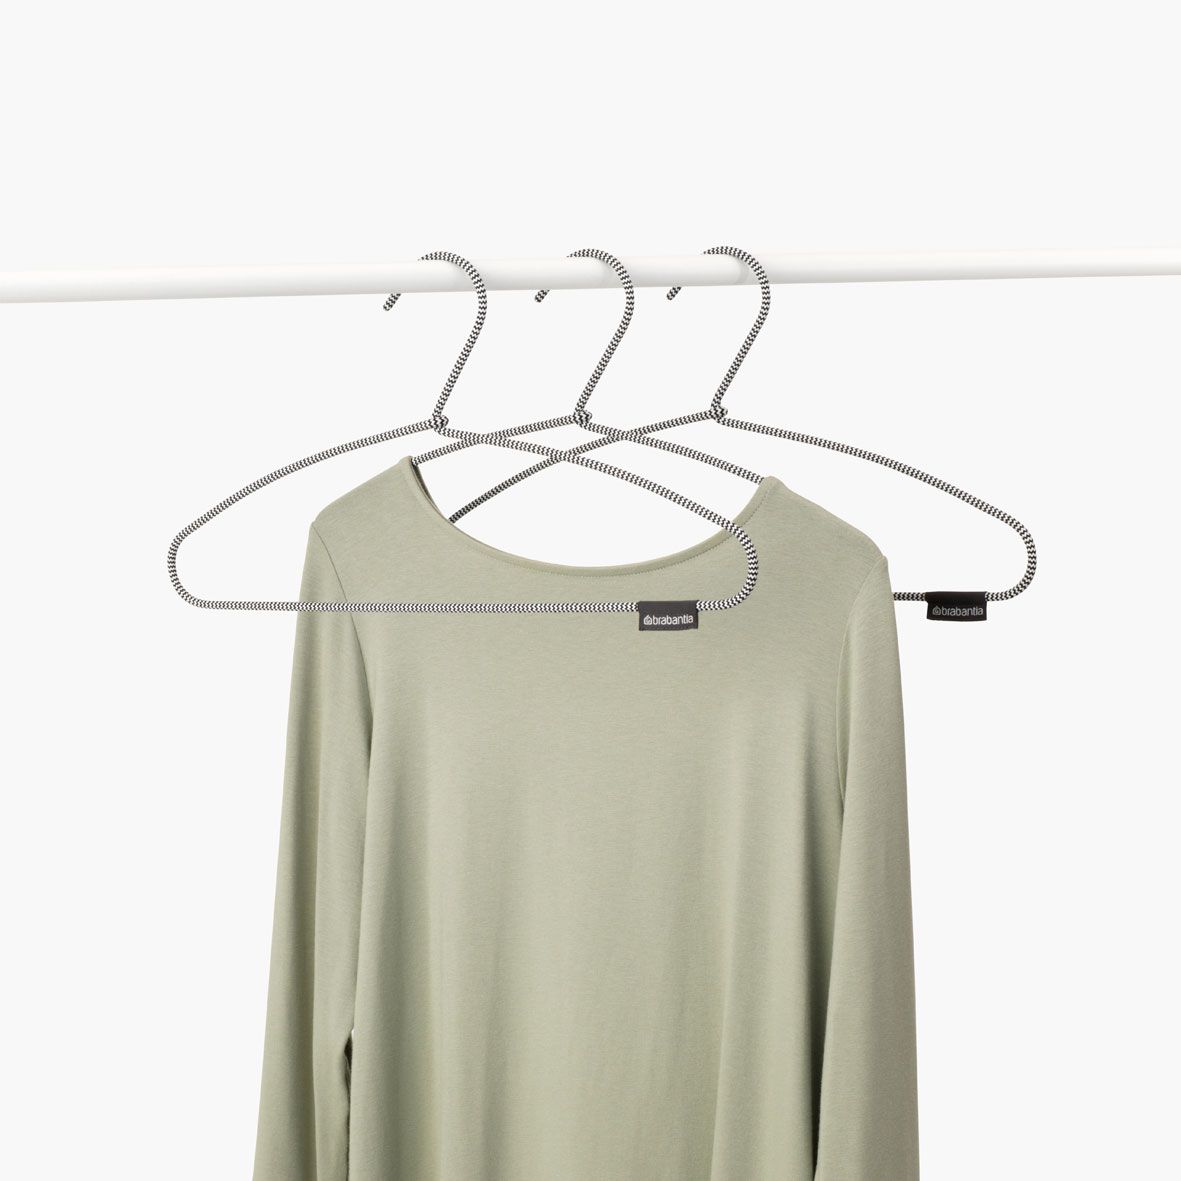 Clothes Hangers Set of 3 - Black / White